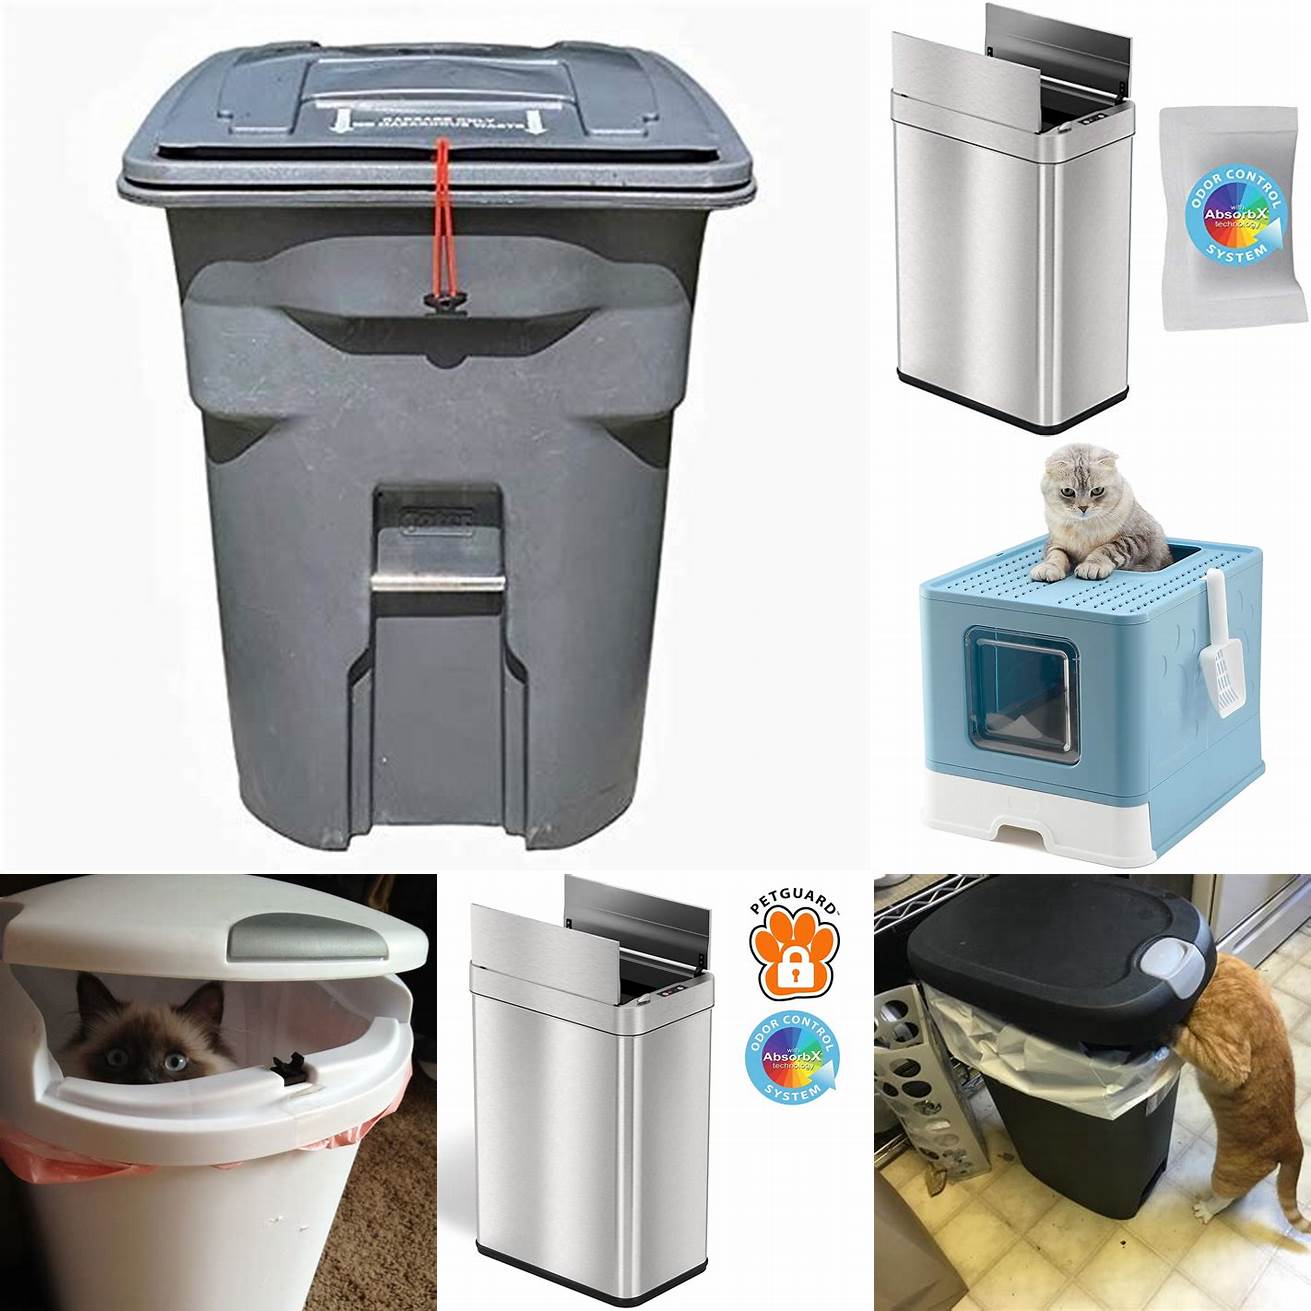 Trash bin with lid